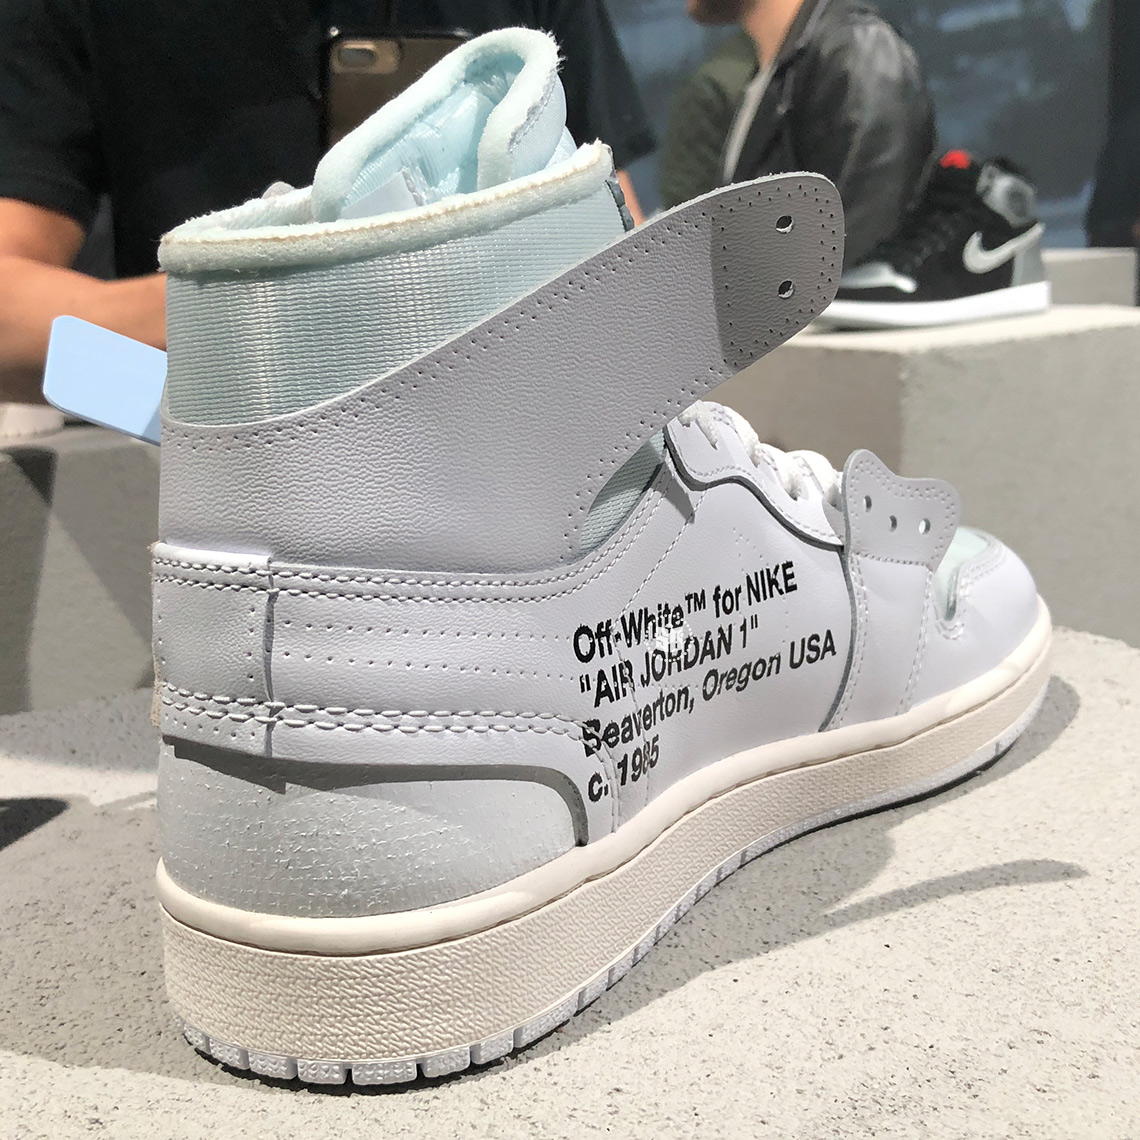 OFF WHITE Air Jordan 1 - White Color | SneakerNews.com